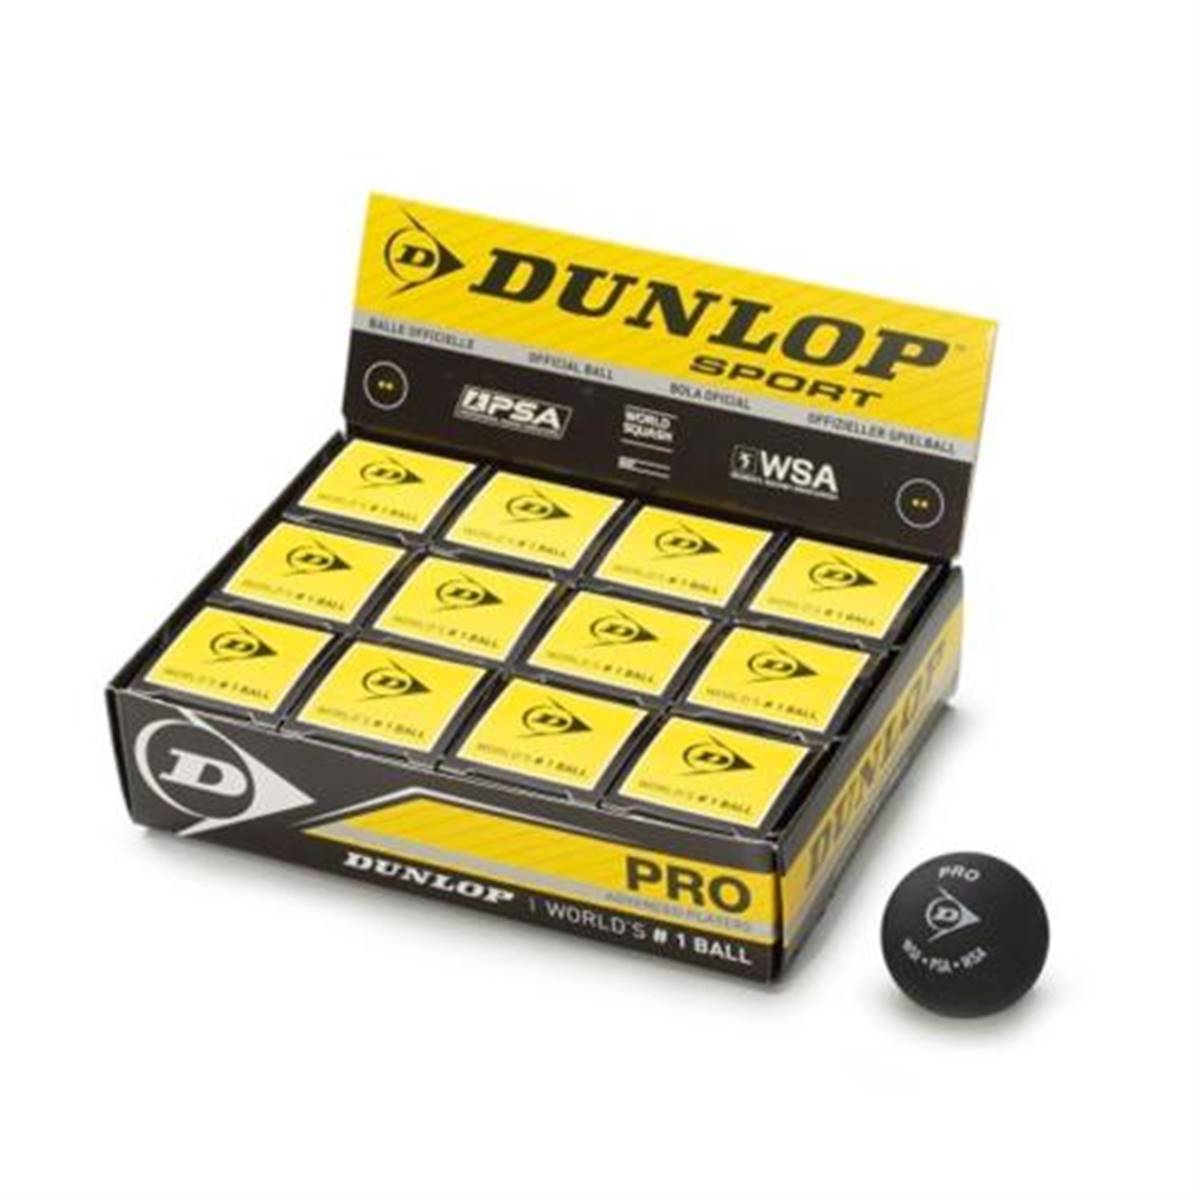 Dunlop Double Yellow Squash Ball X12 Balls 